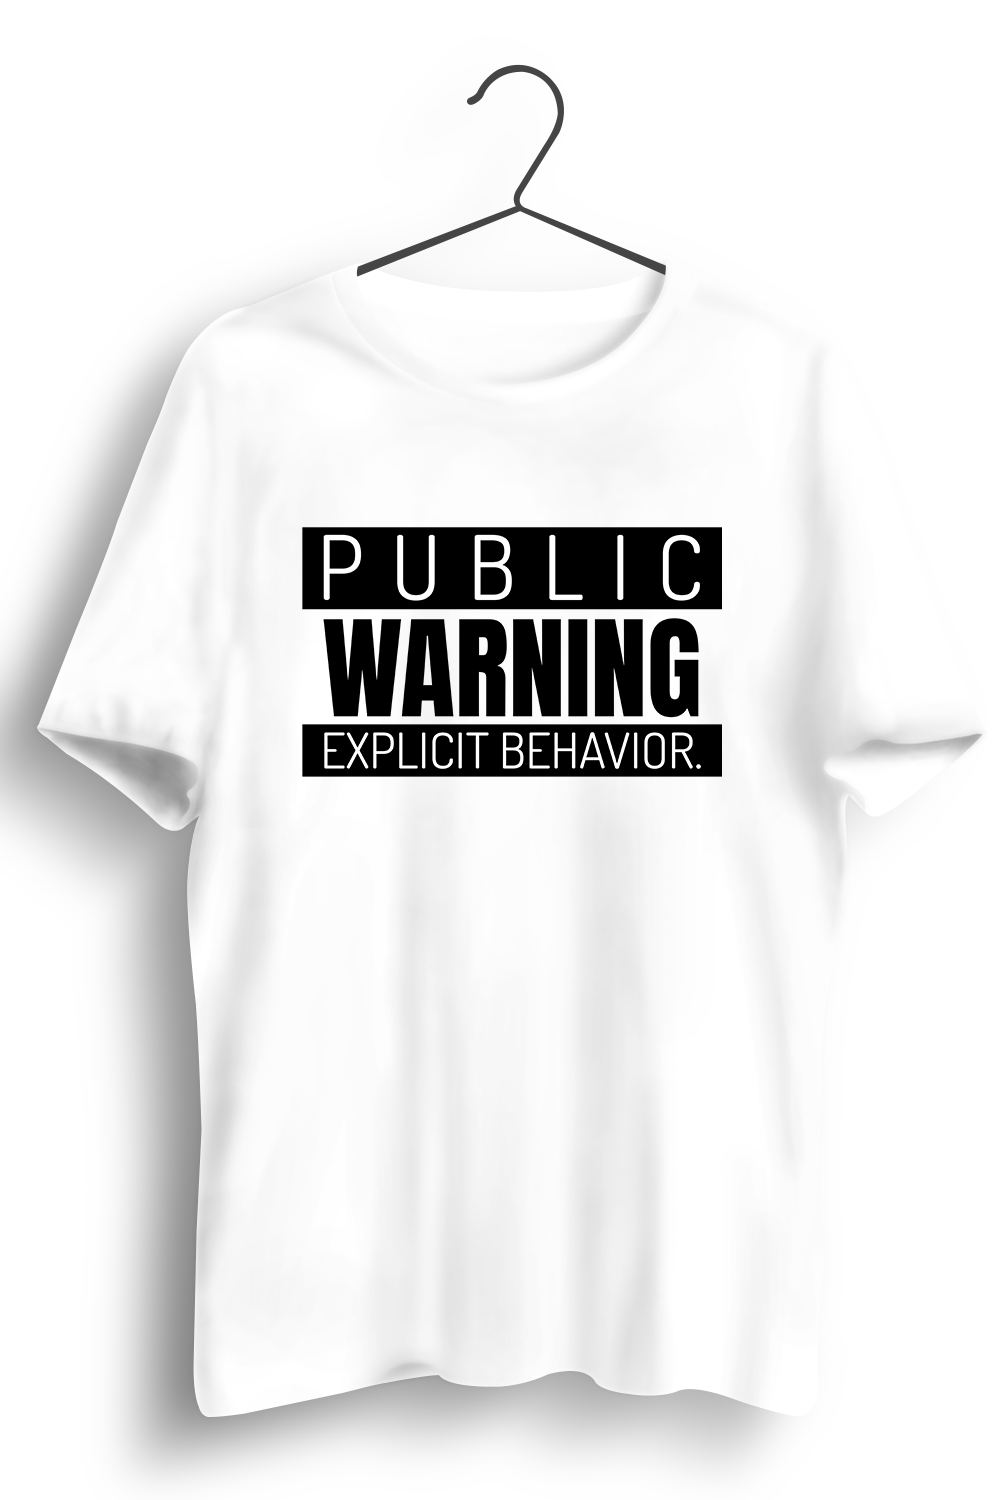 Public Warning Graphic Printed White Tshirt